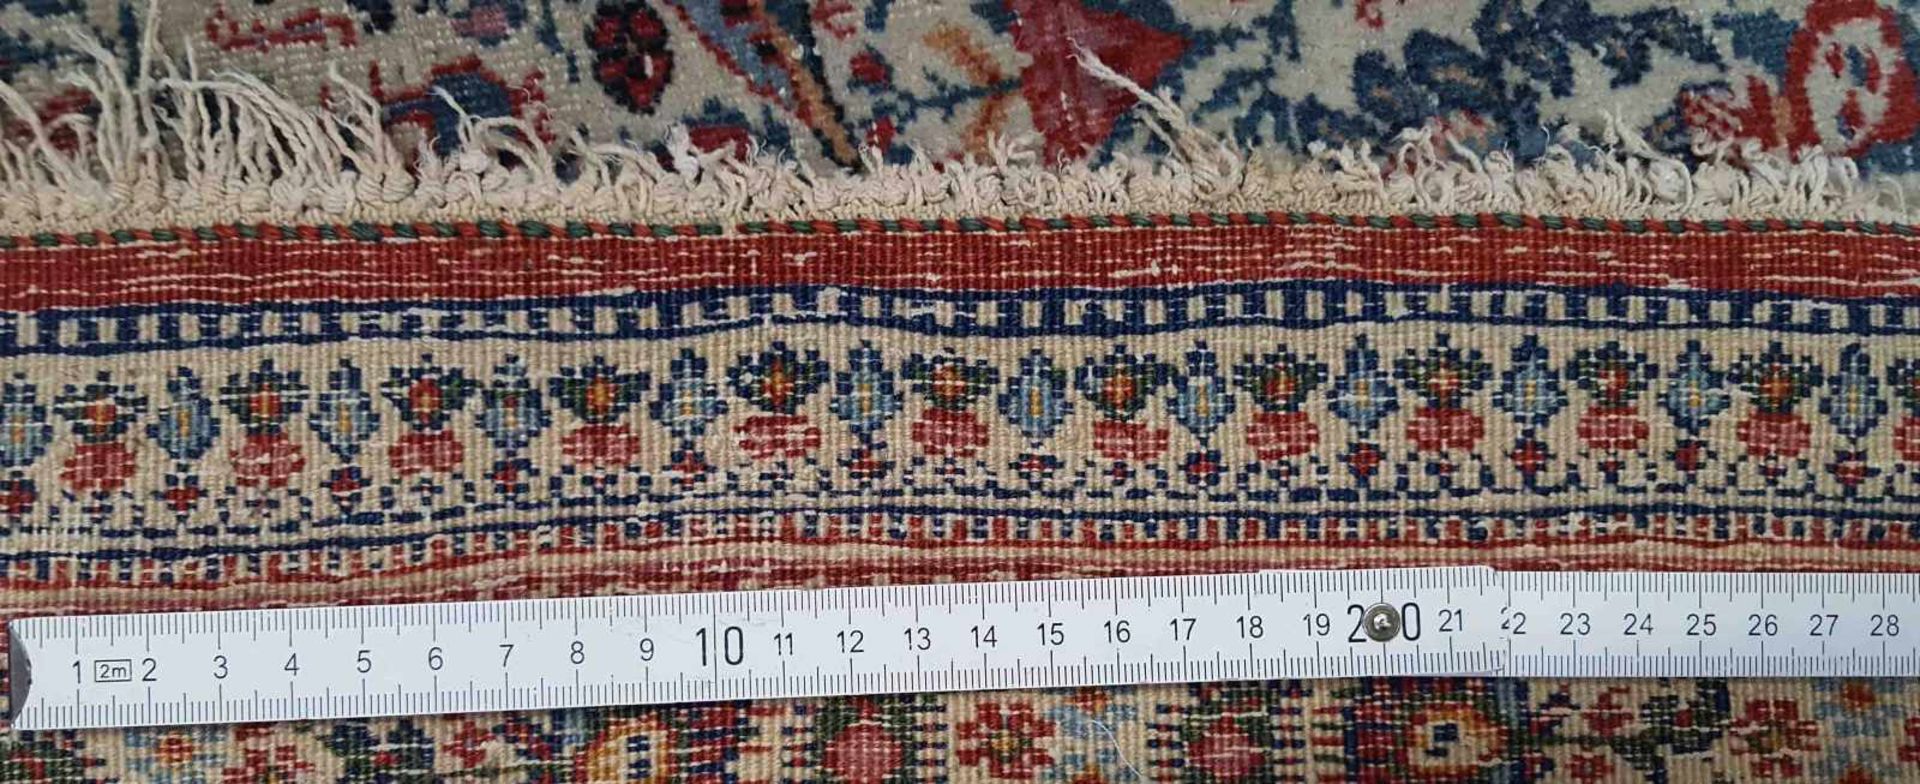 Tehran Persian carpet. "Zili - Sultani" pattern. Iran. Antique. Around 1900. - Image 7 of 7